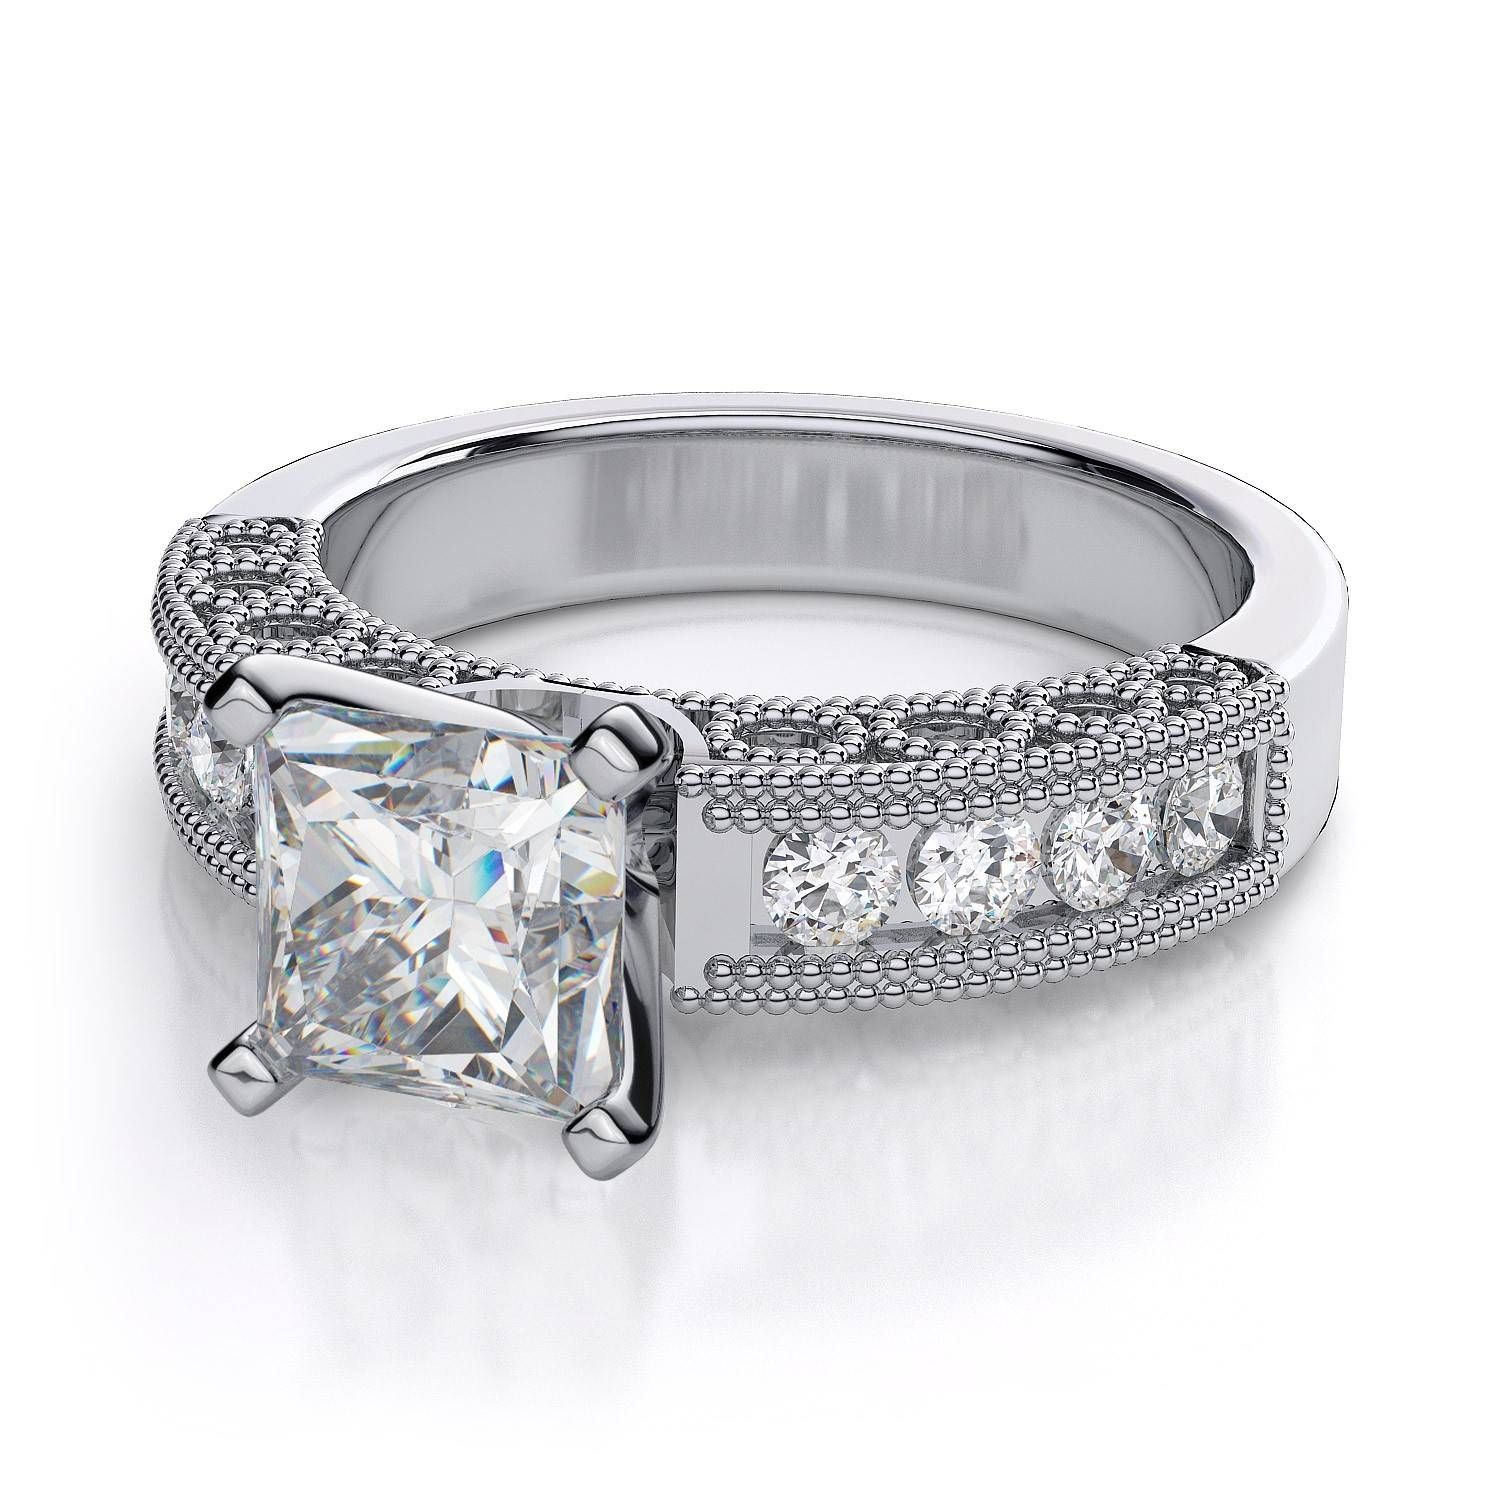 40ctw Vintage Filigree Princess Cut Sidestones Diamond Engagement With Regard To Princess Cut Engagement Rings (View 11 of 15)